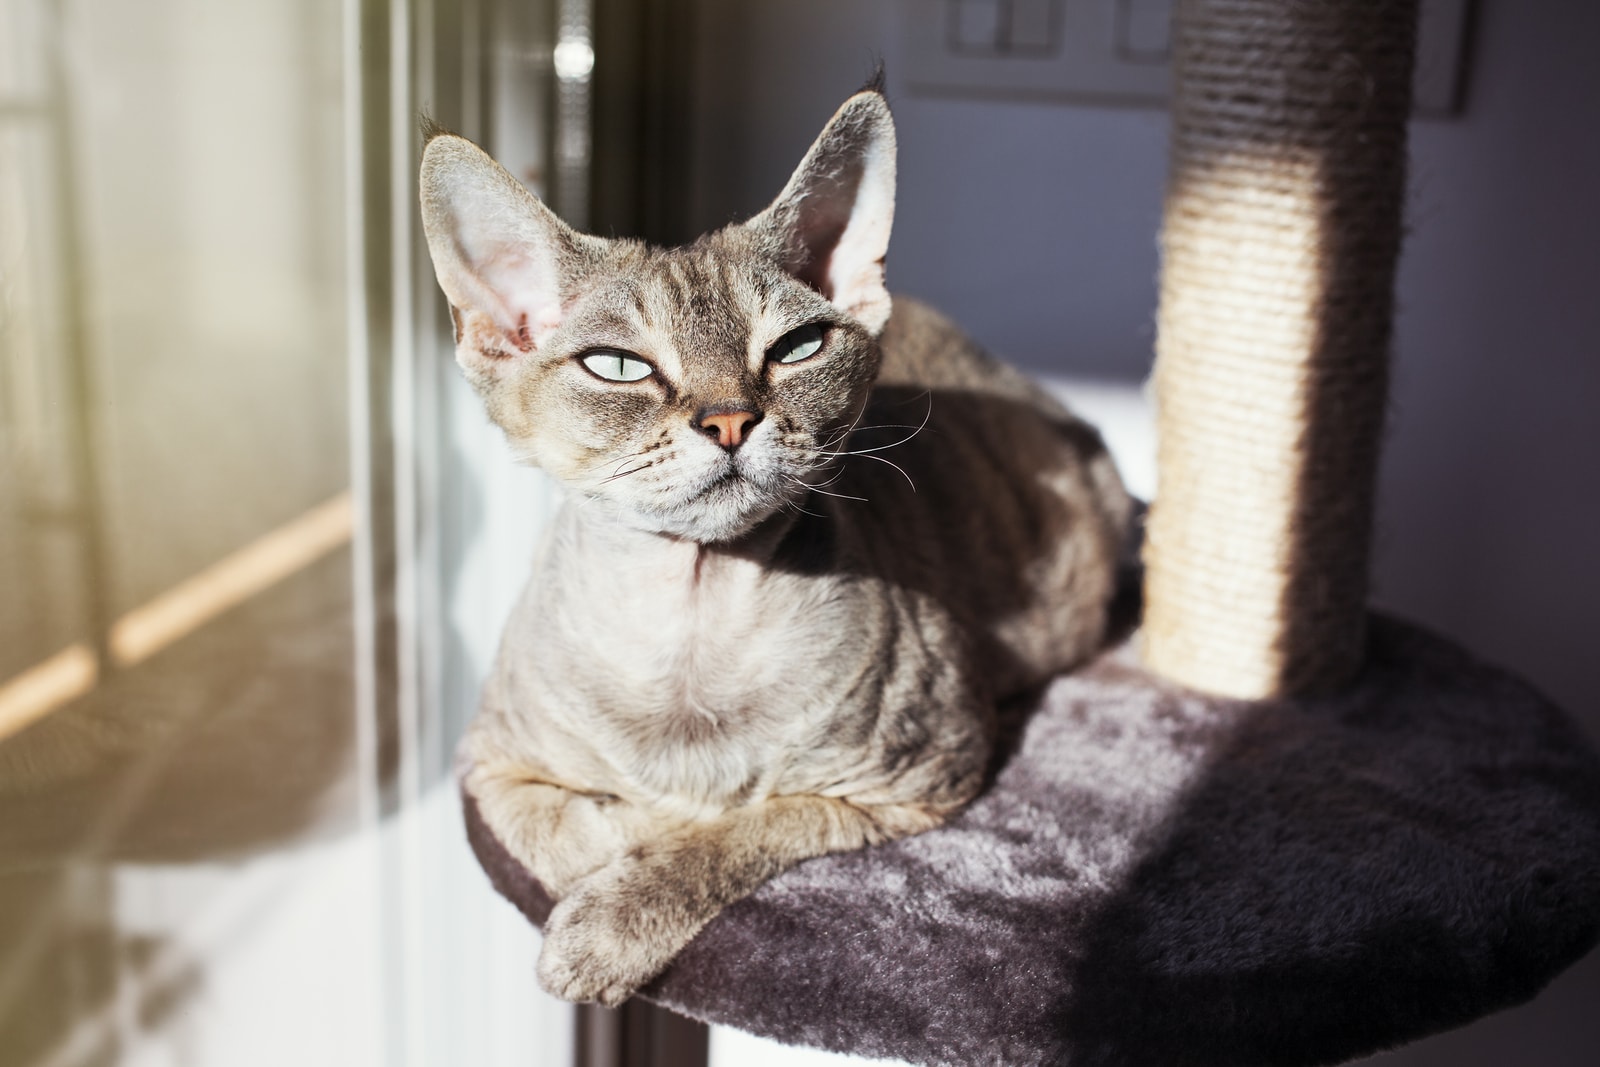 cat sun bathing on scratcher